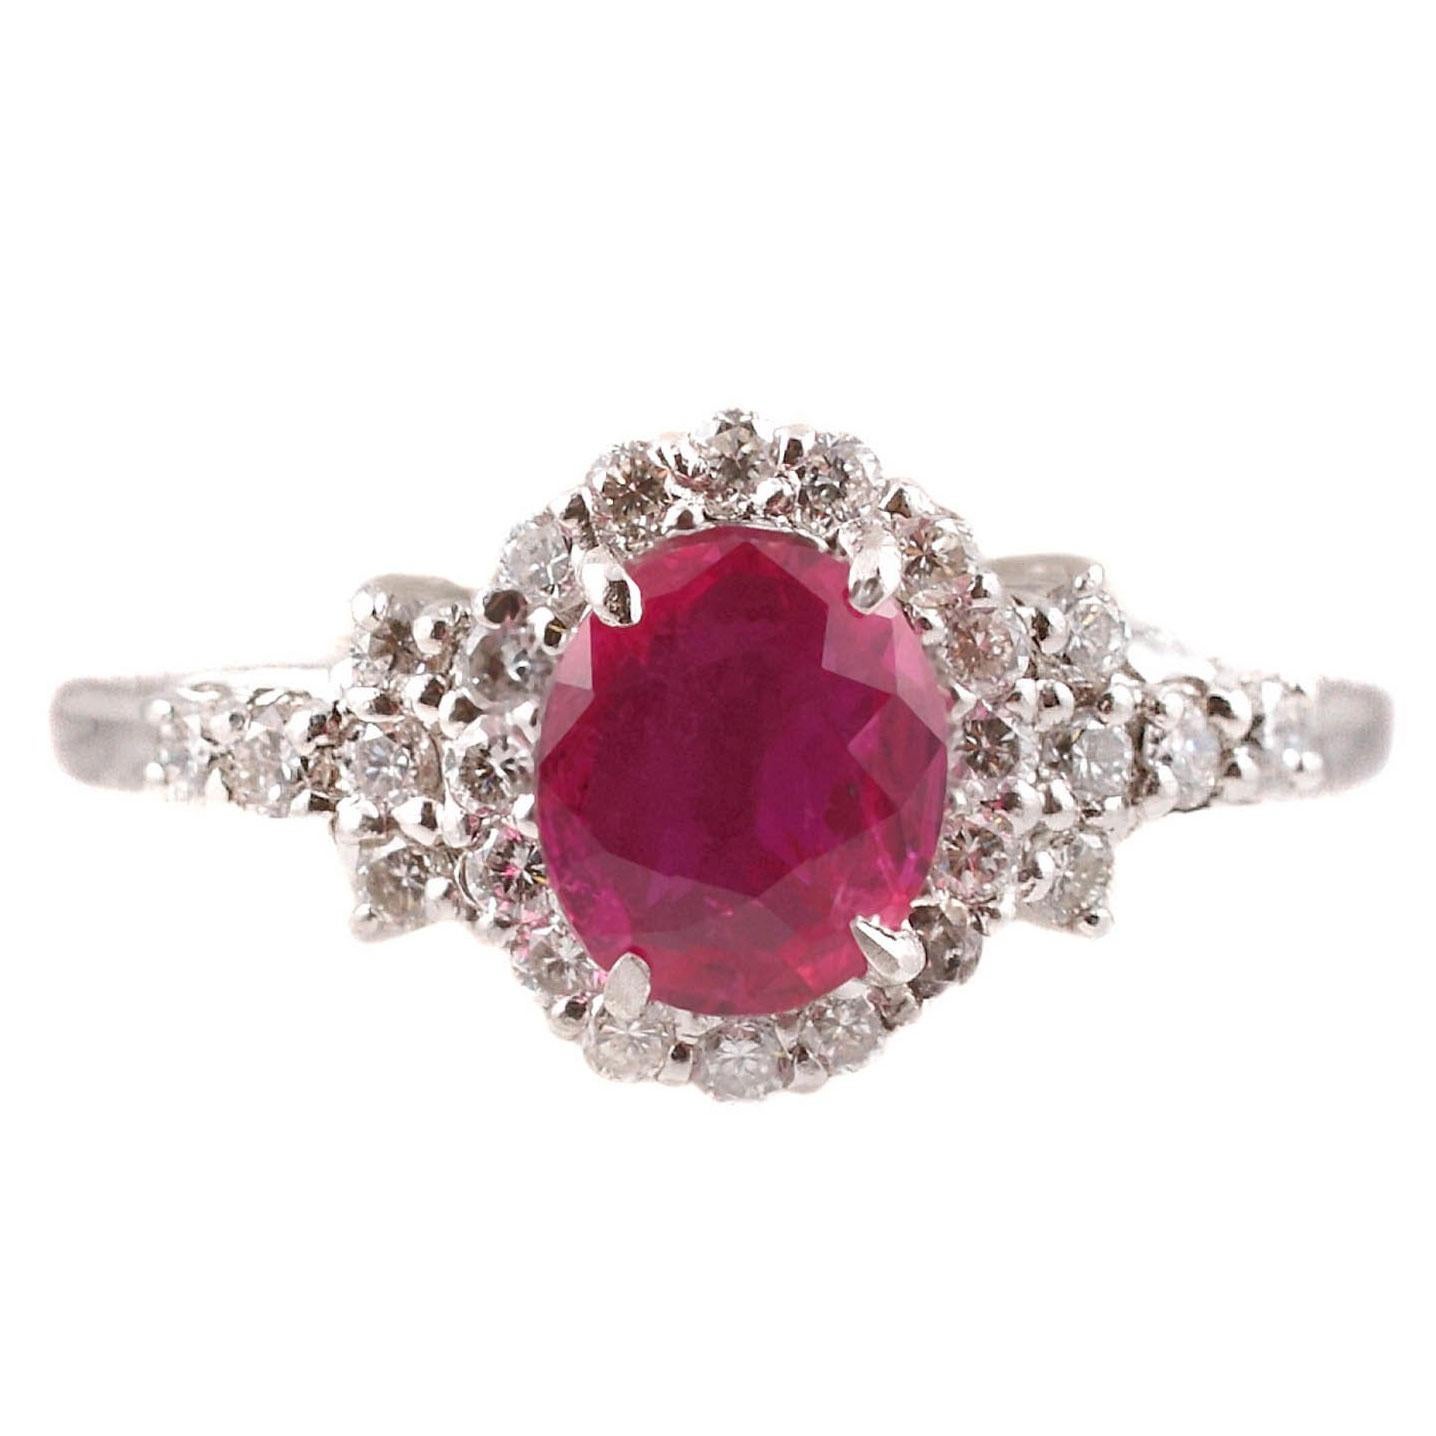 1.15 Carat Burma Ruby Diamond Ring in Platinum